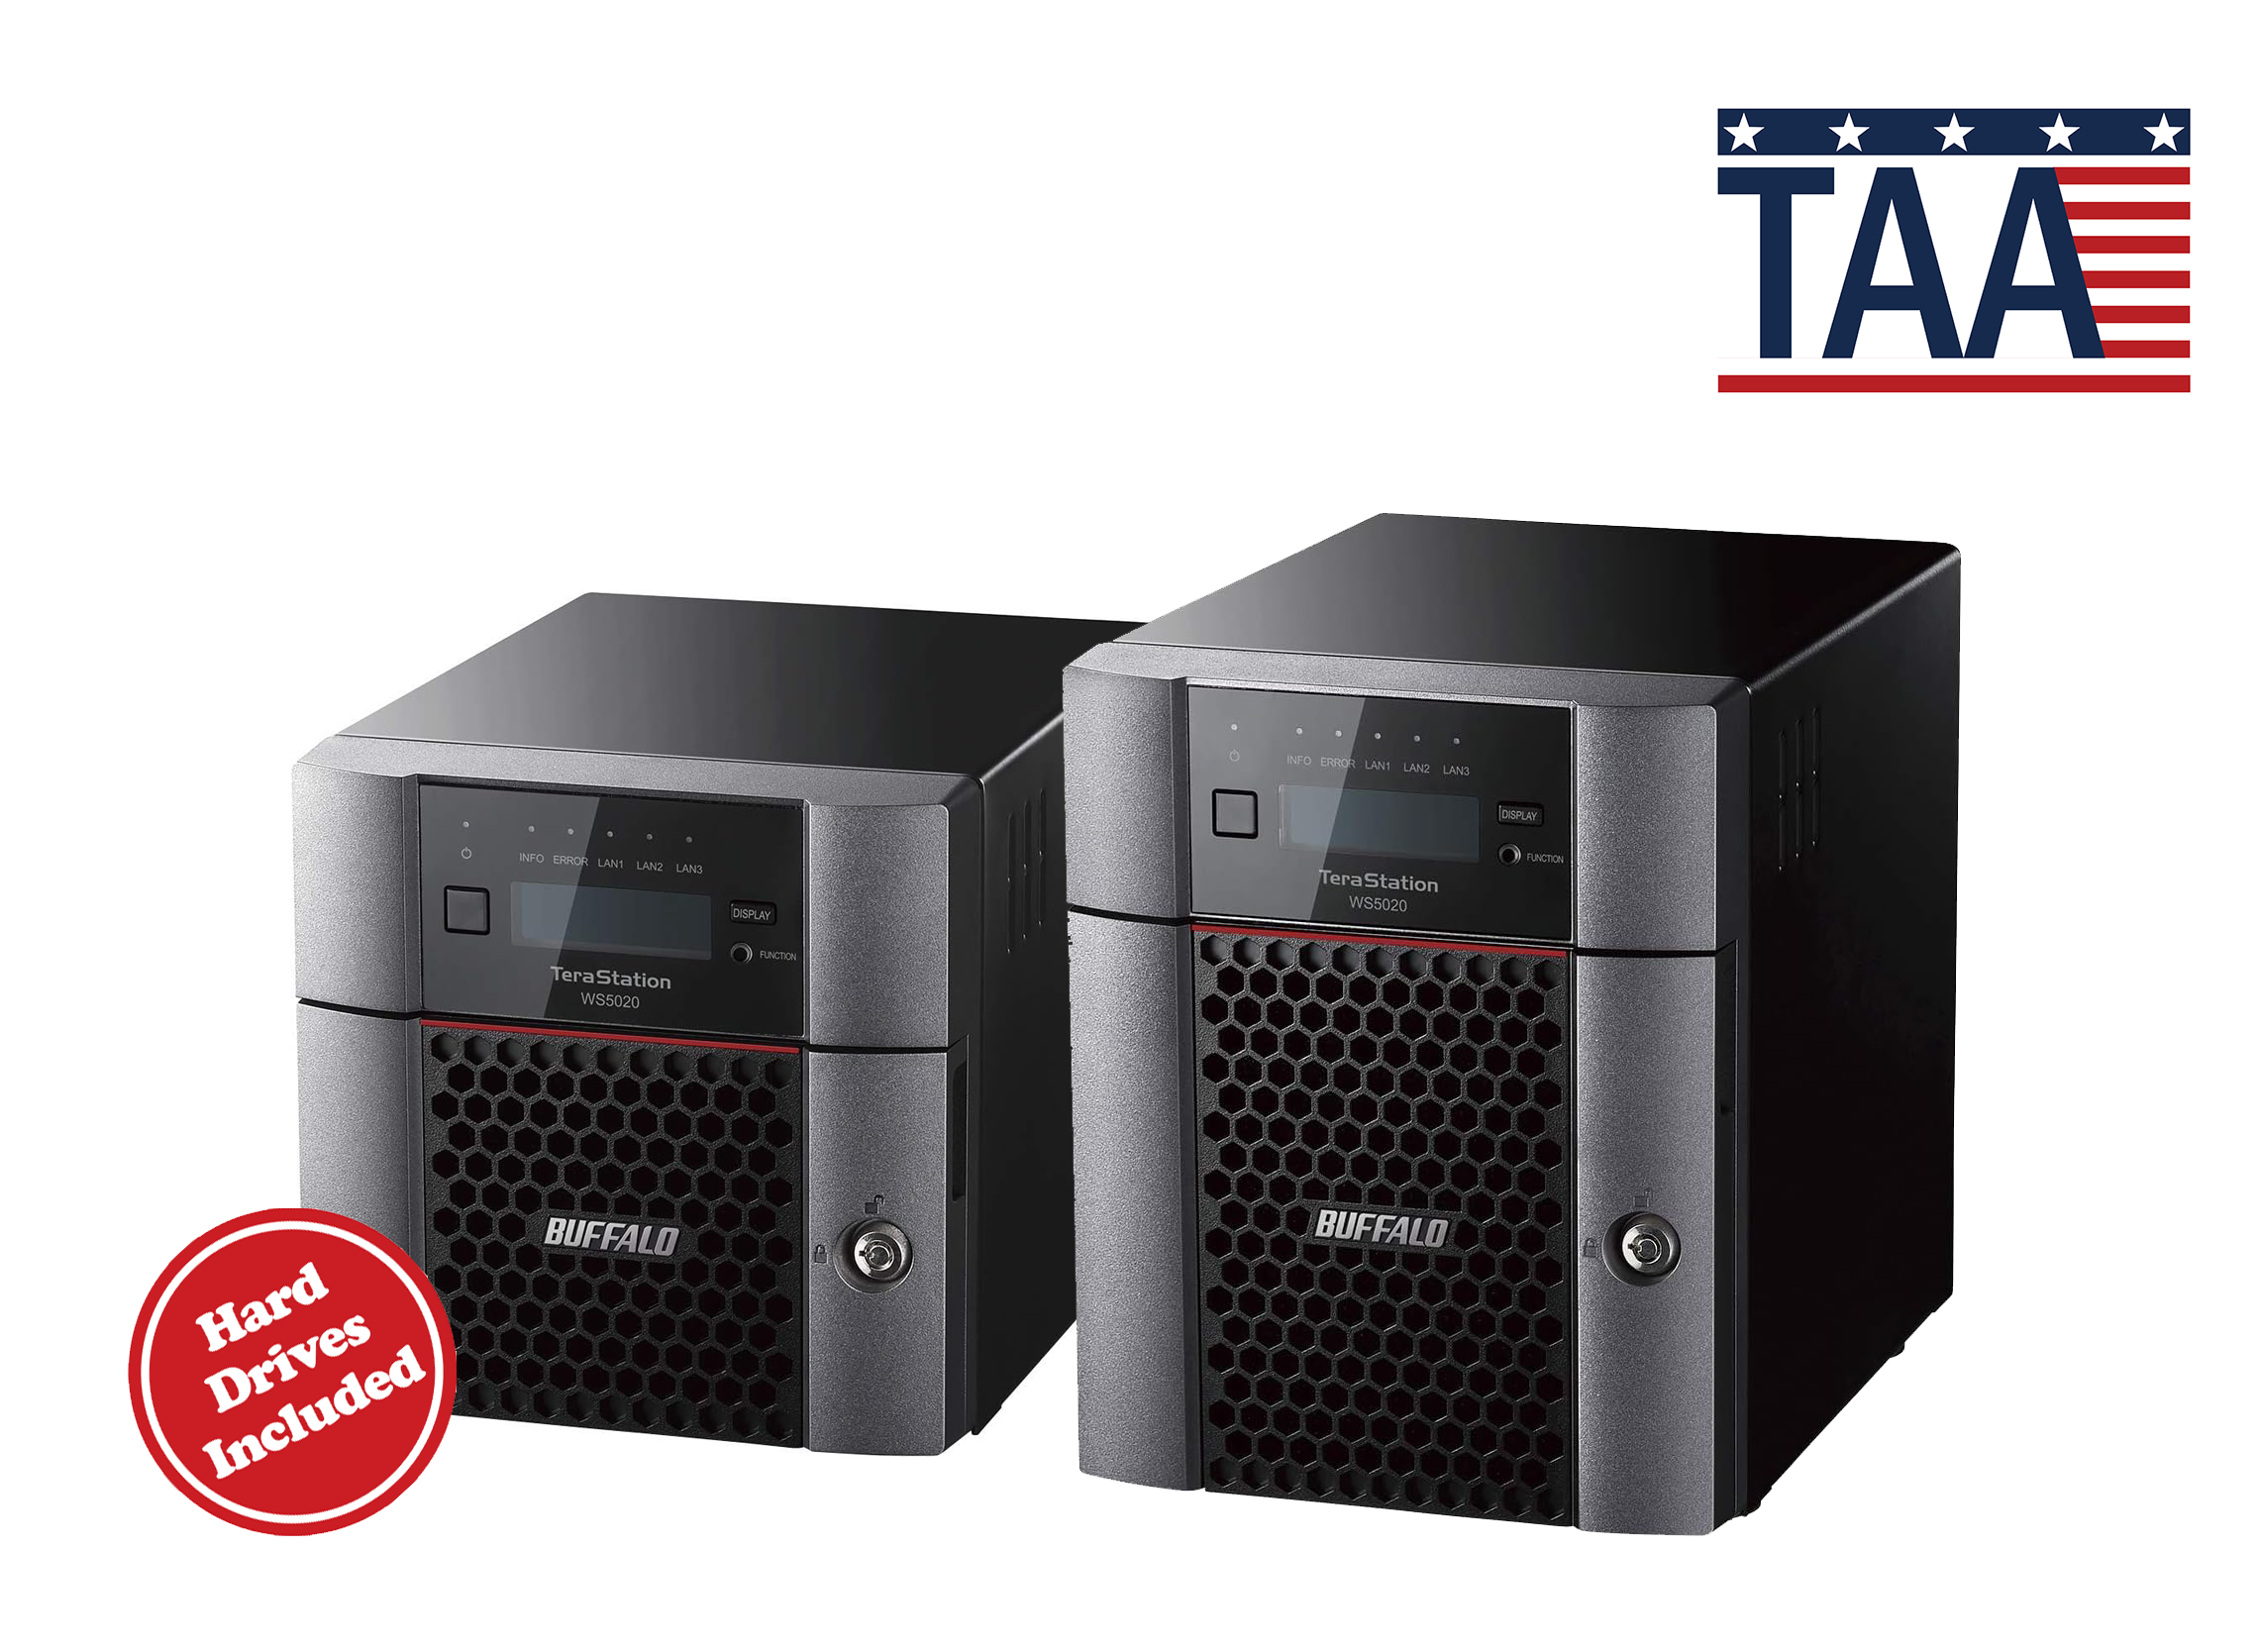 TeraStation 3020 Network Attached Storage Solution - Server 